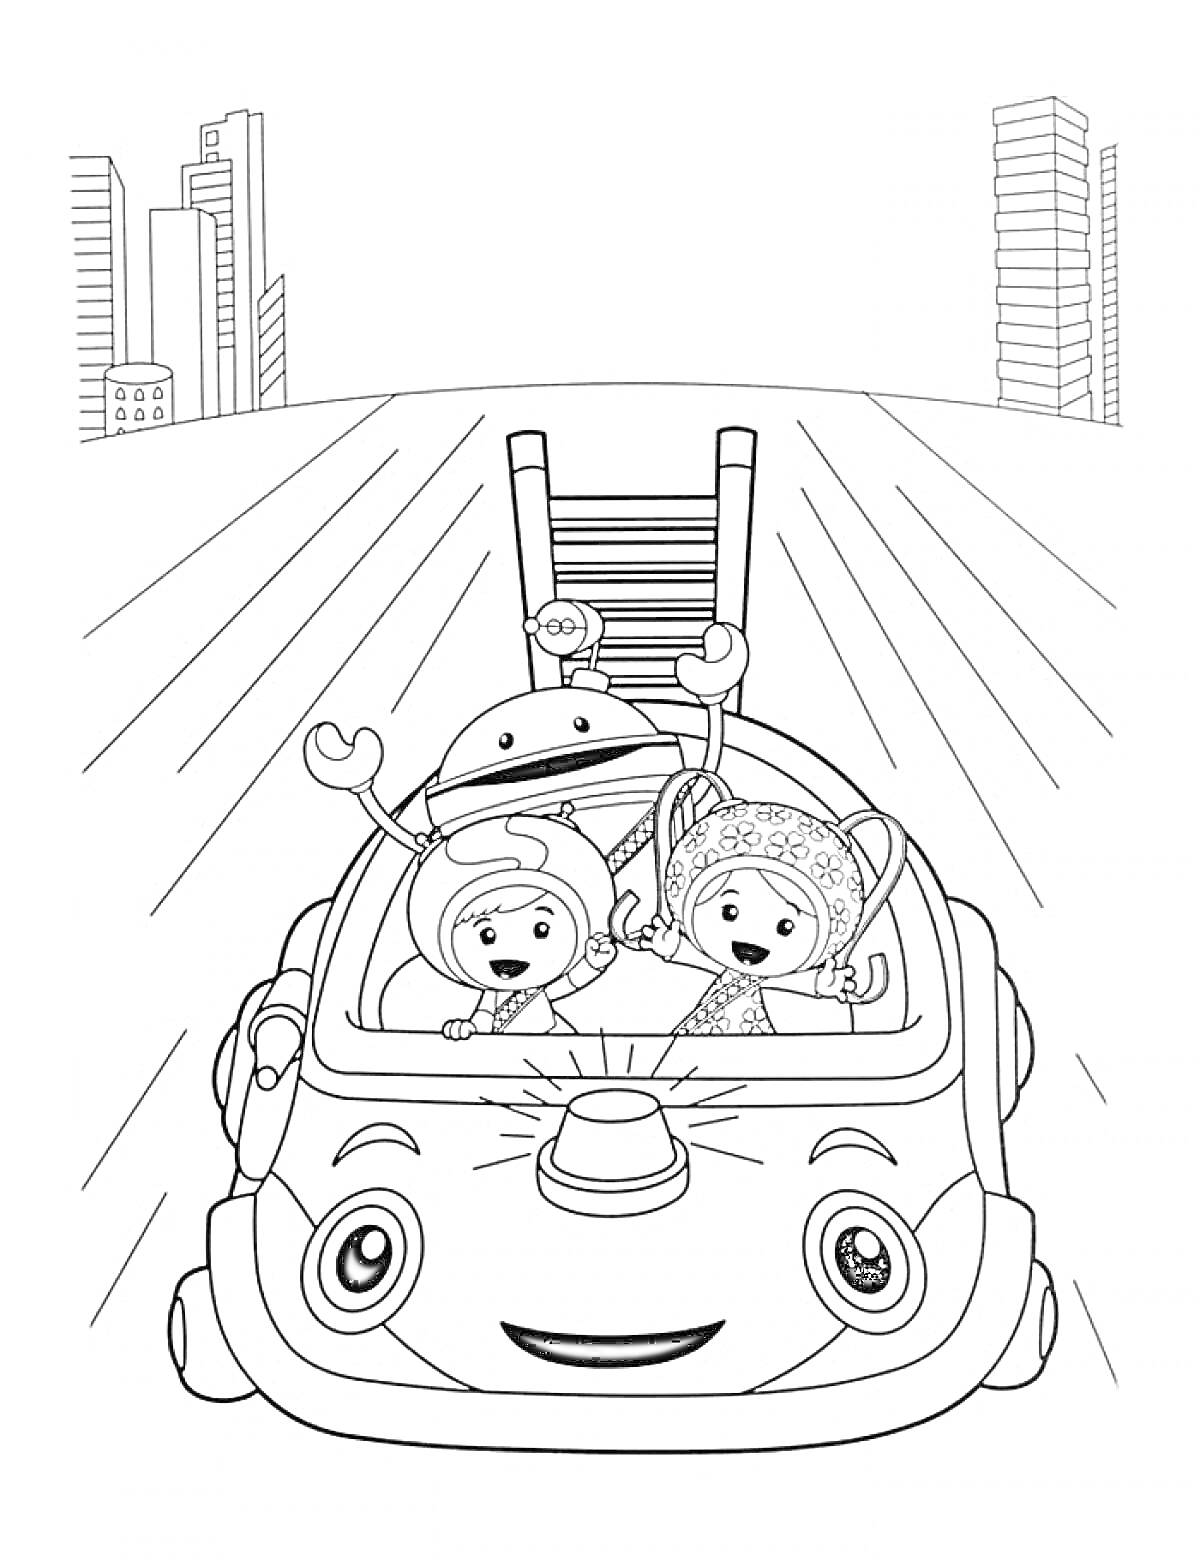 Герои Умизуми в машине на фоне города